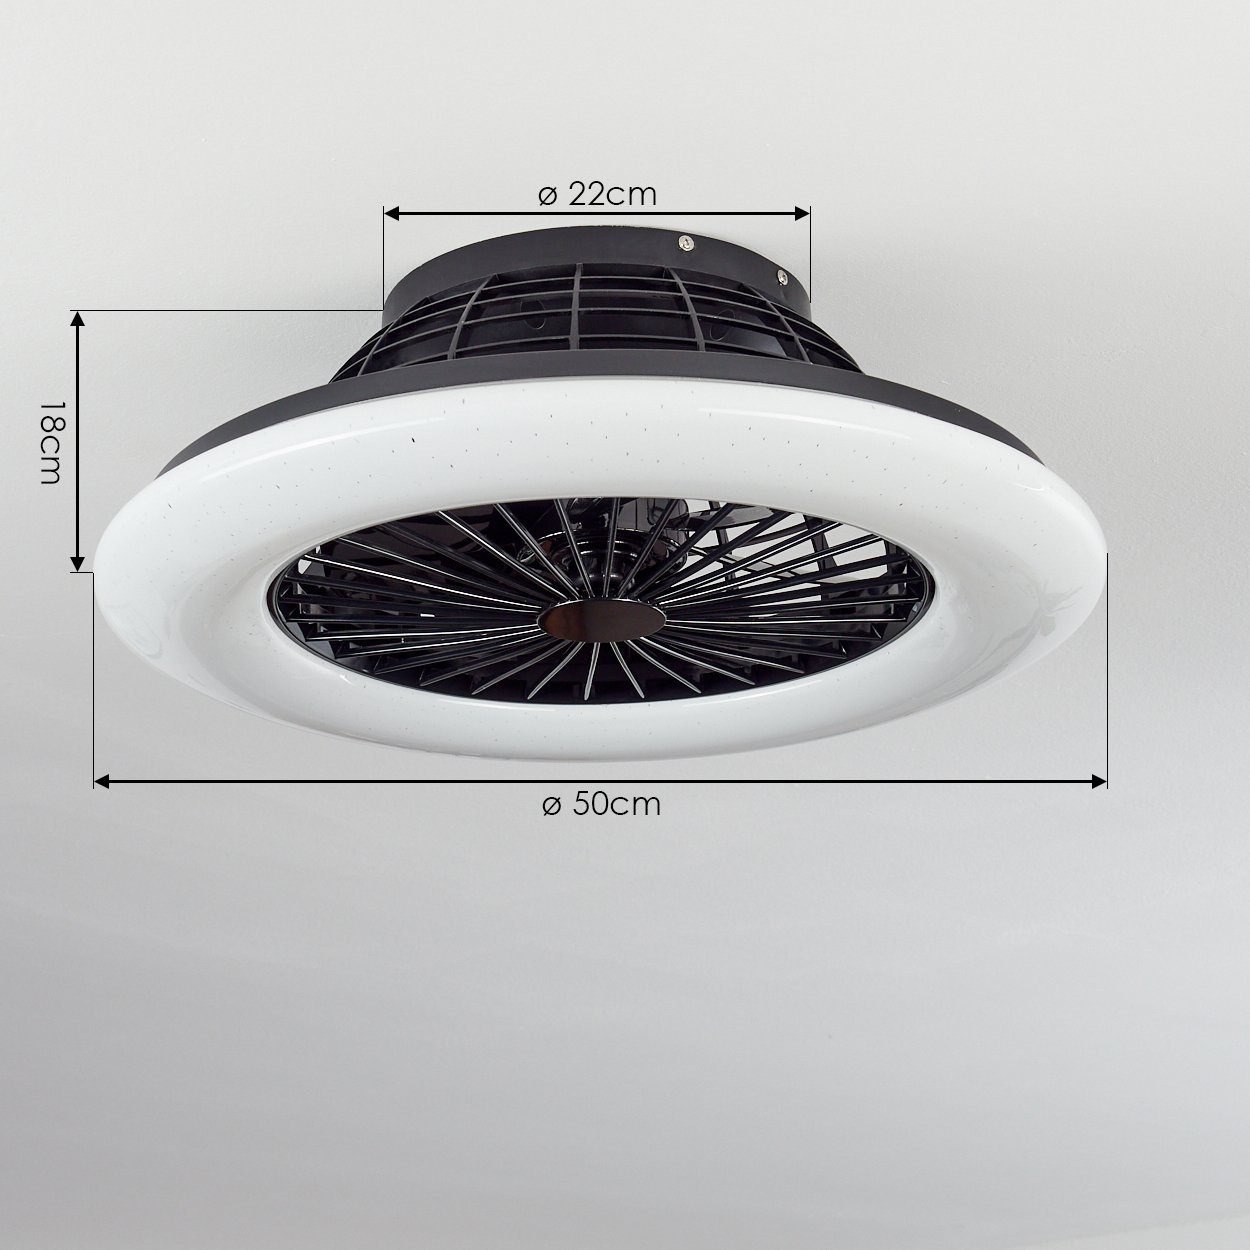 Metall, Kunststoff, aus »Concas« Weiß hofstein Deckenlampe, Ventilator Schwarz, Tischturmventilator